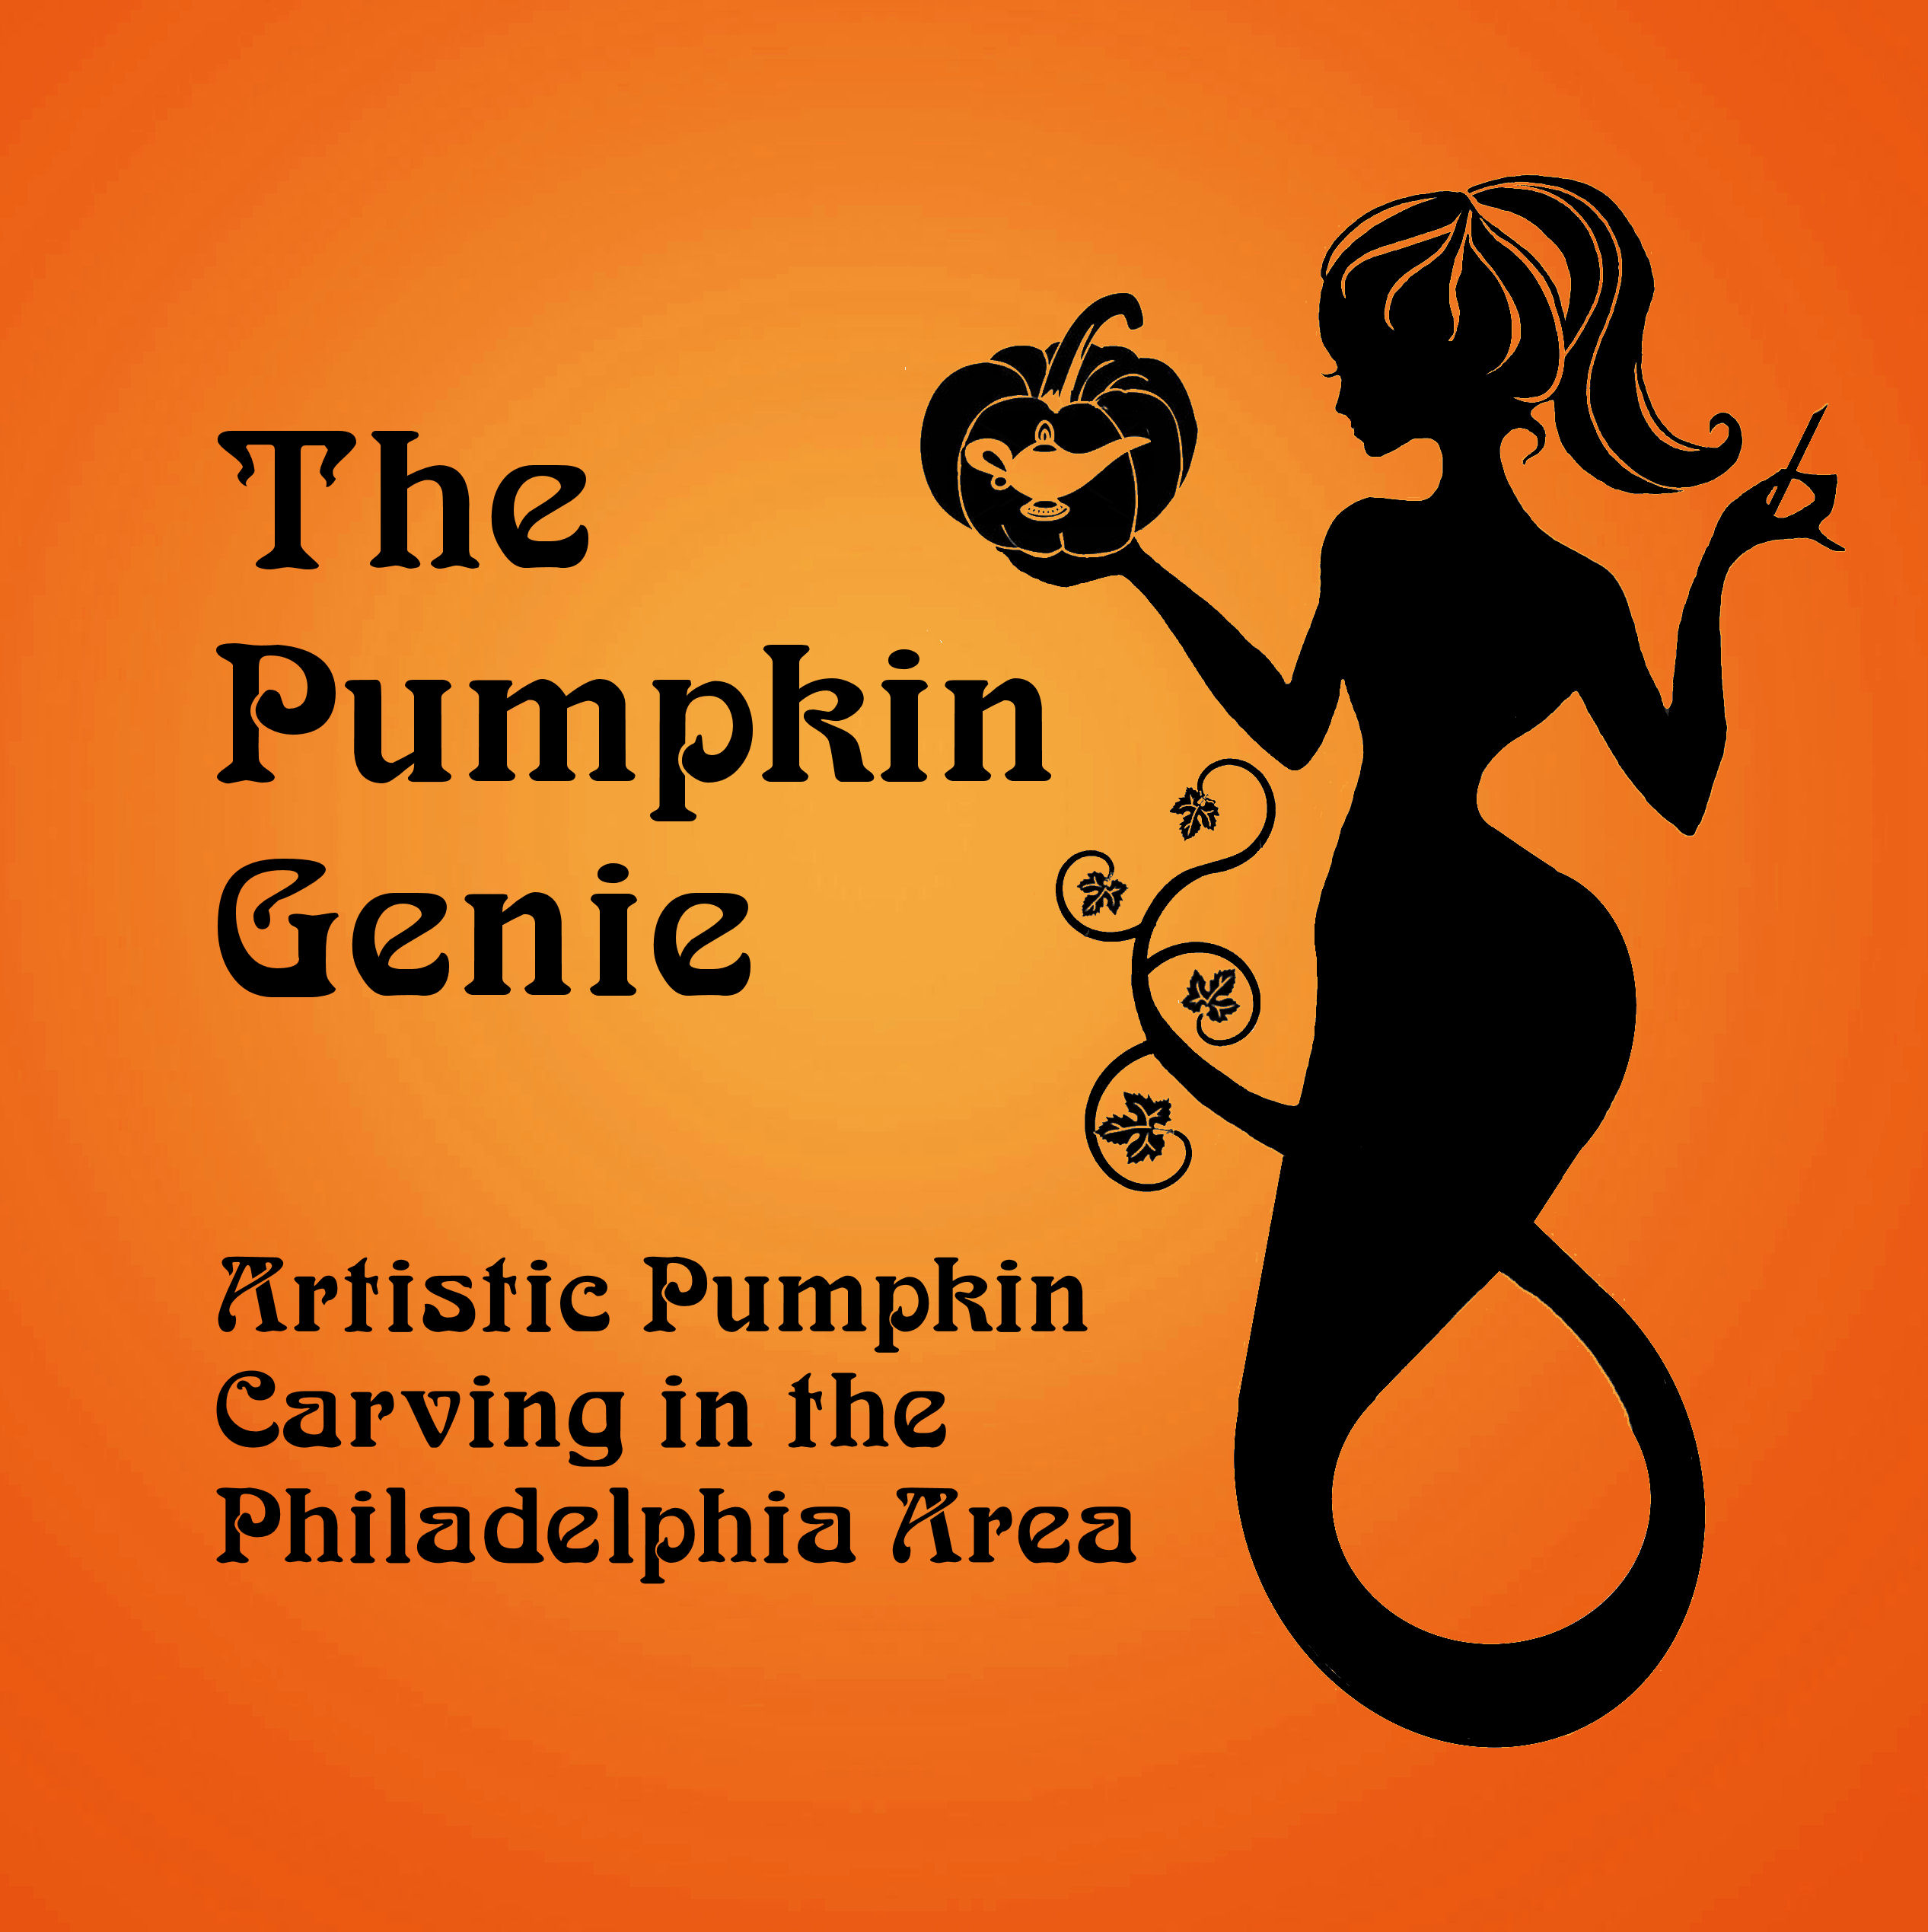 The Pumpkin Genie